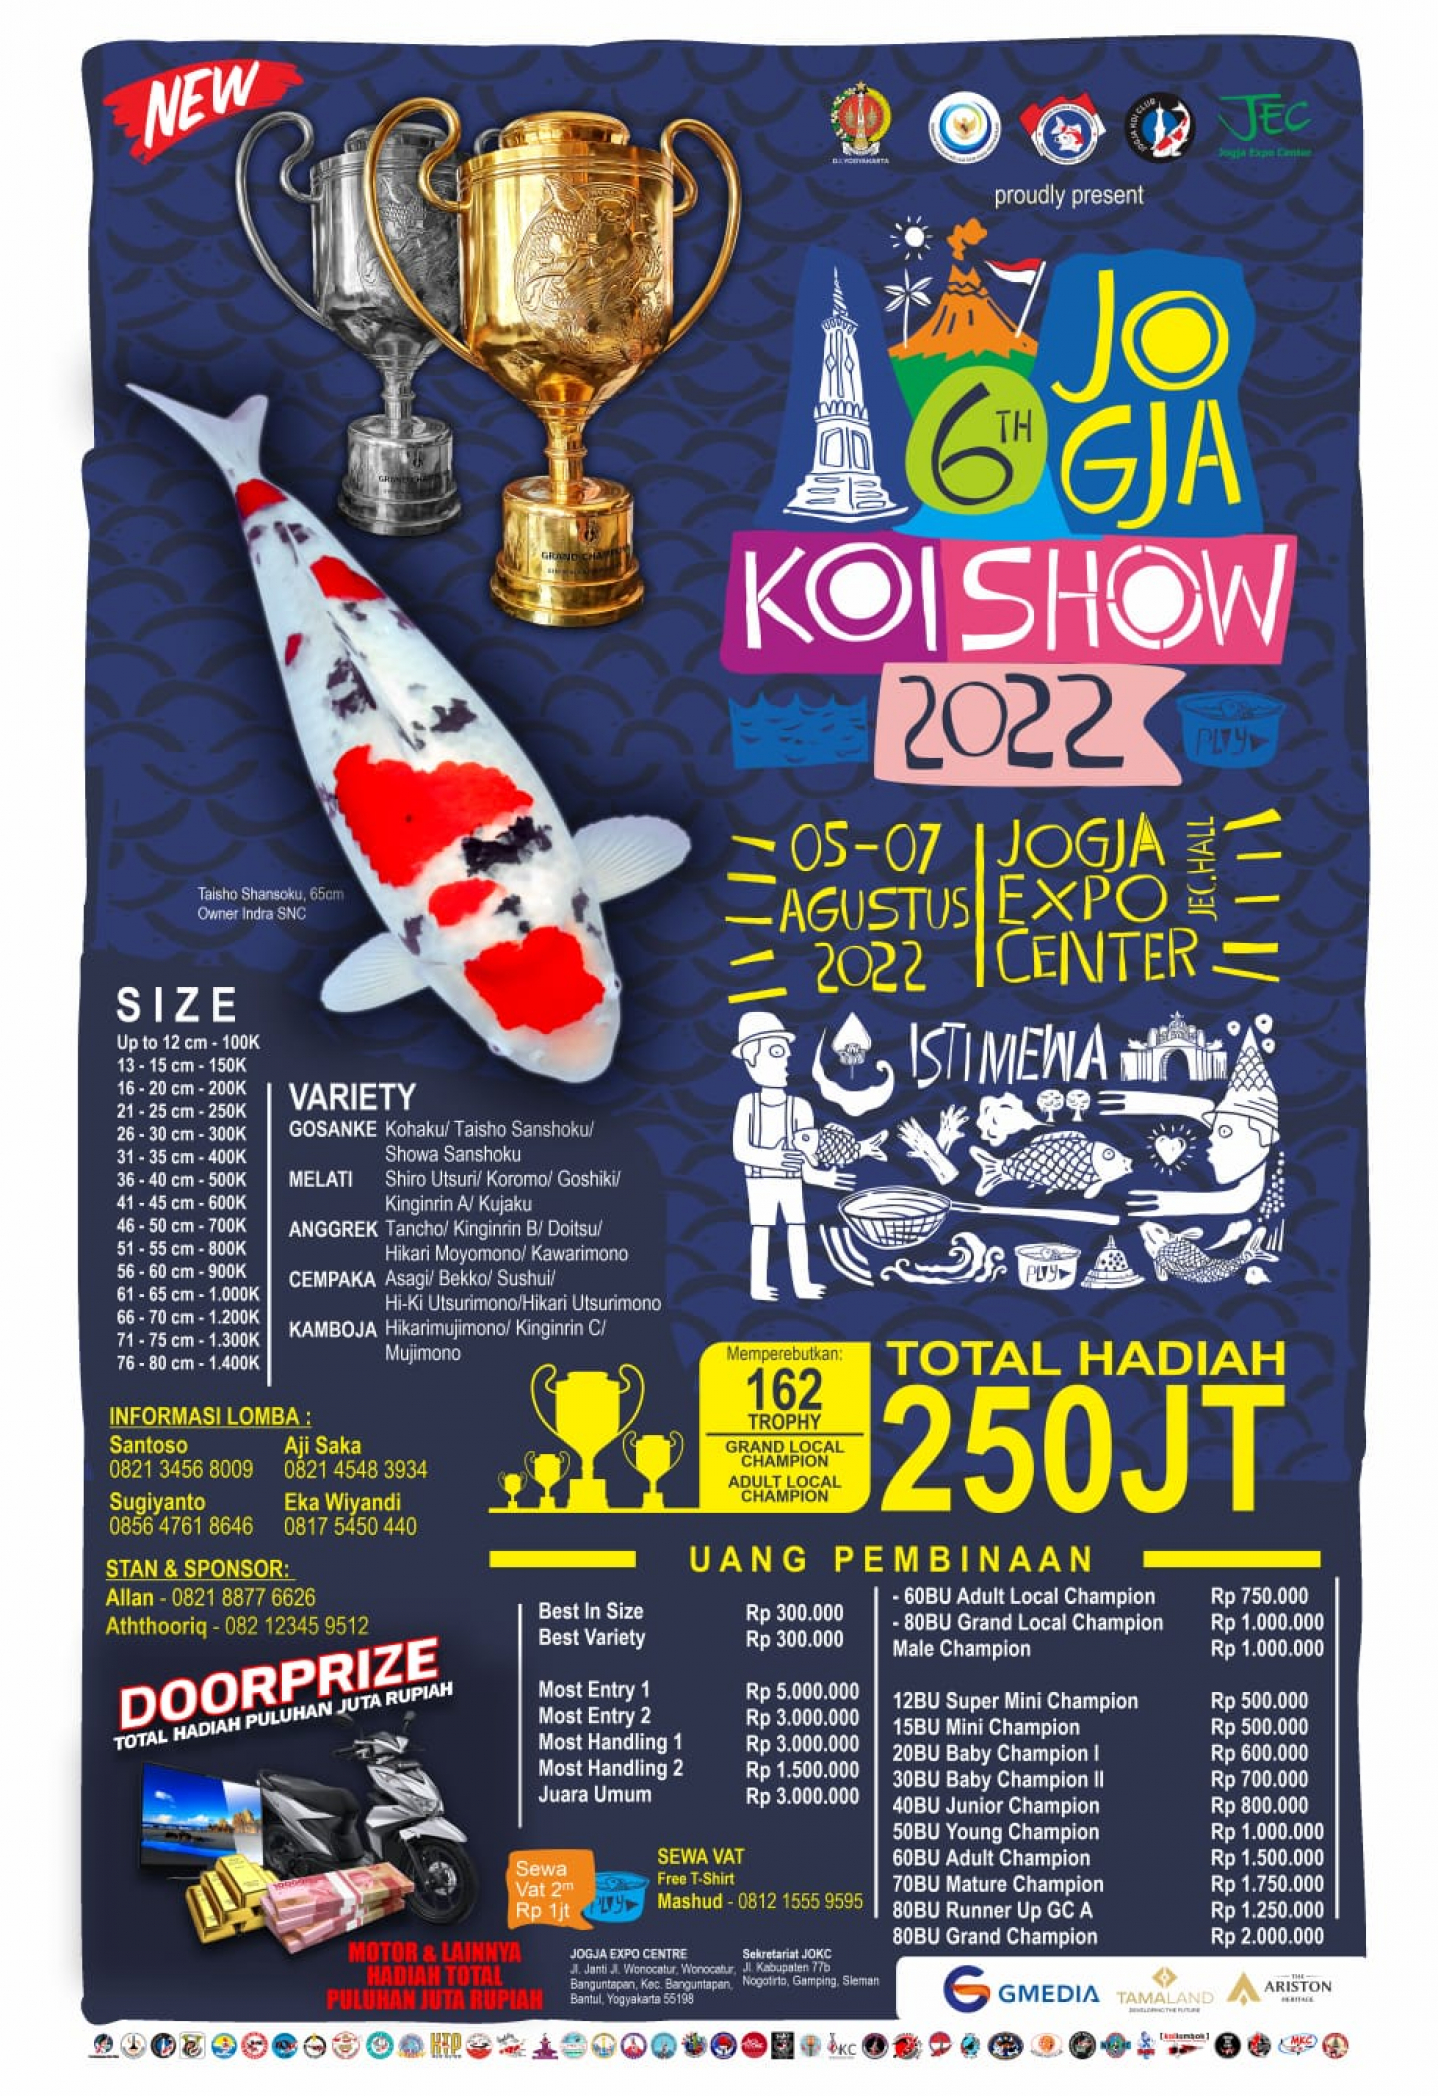 6th Jogja Koi Show 2022